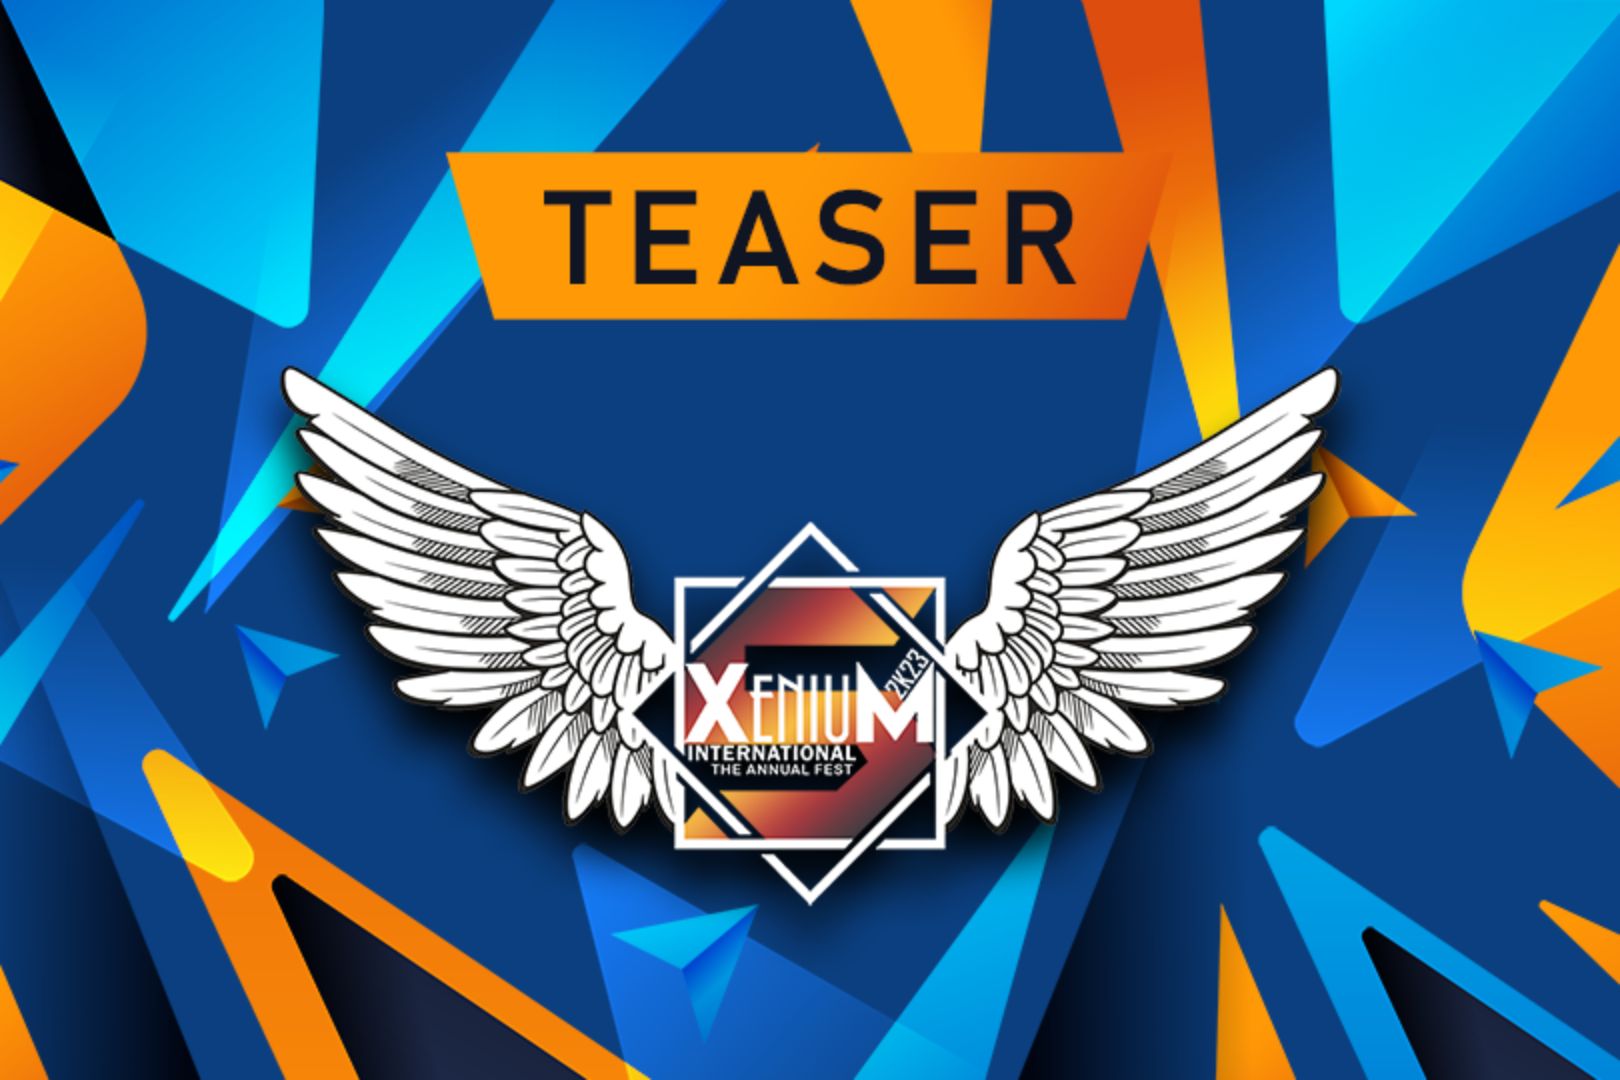 XeniuM International 5.0 Teaser